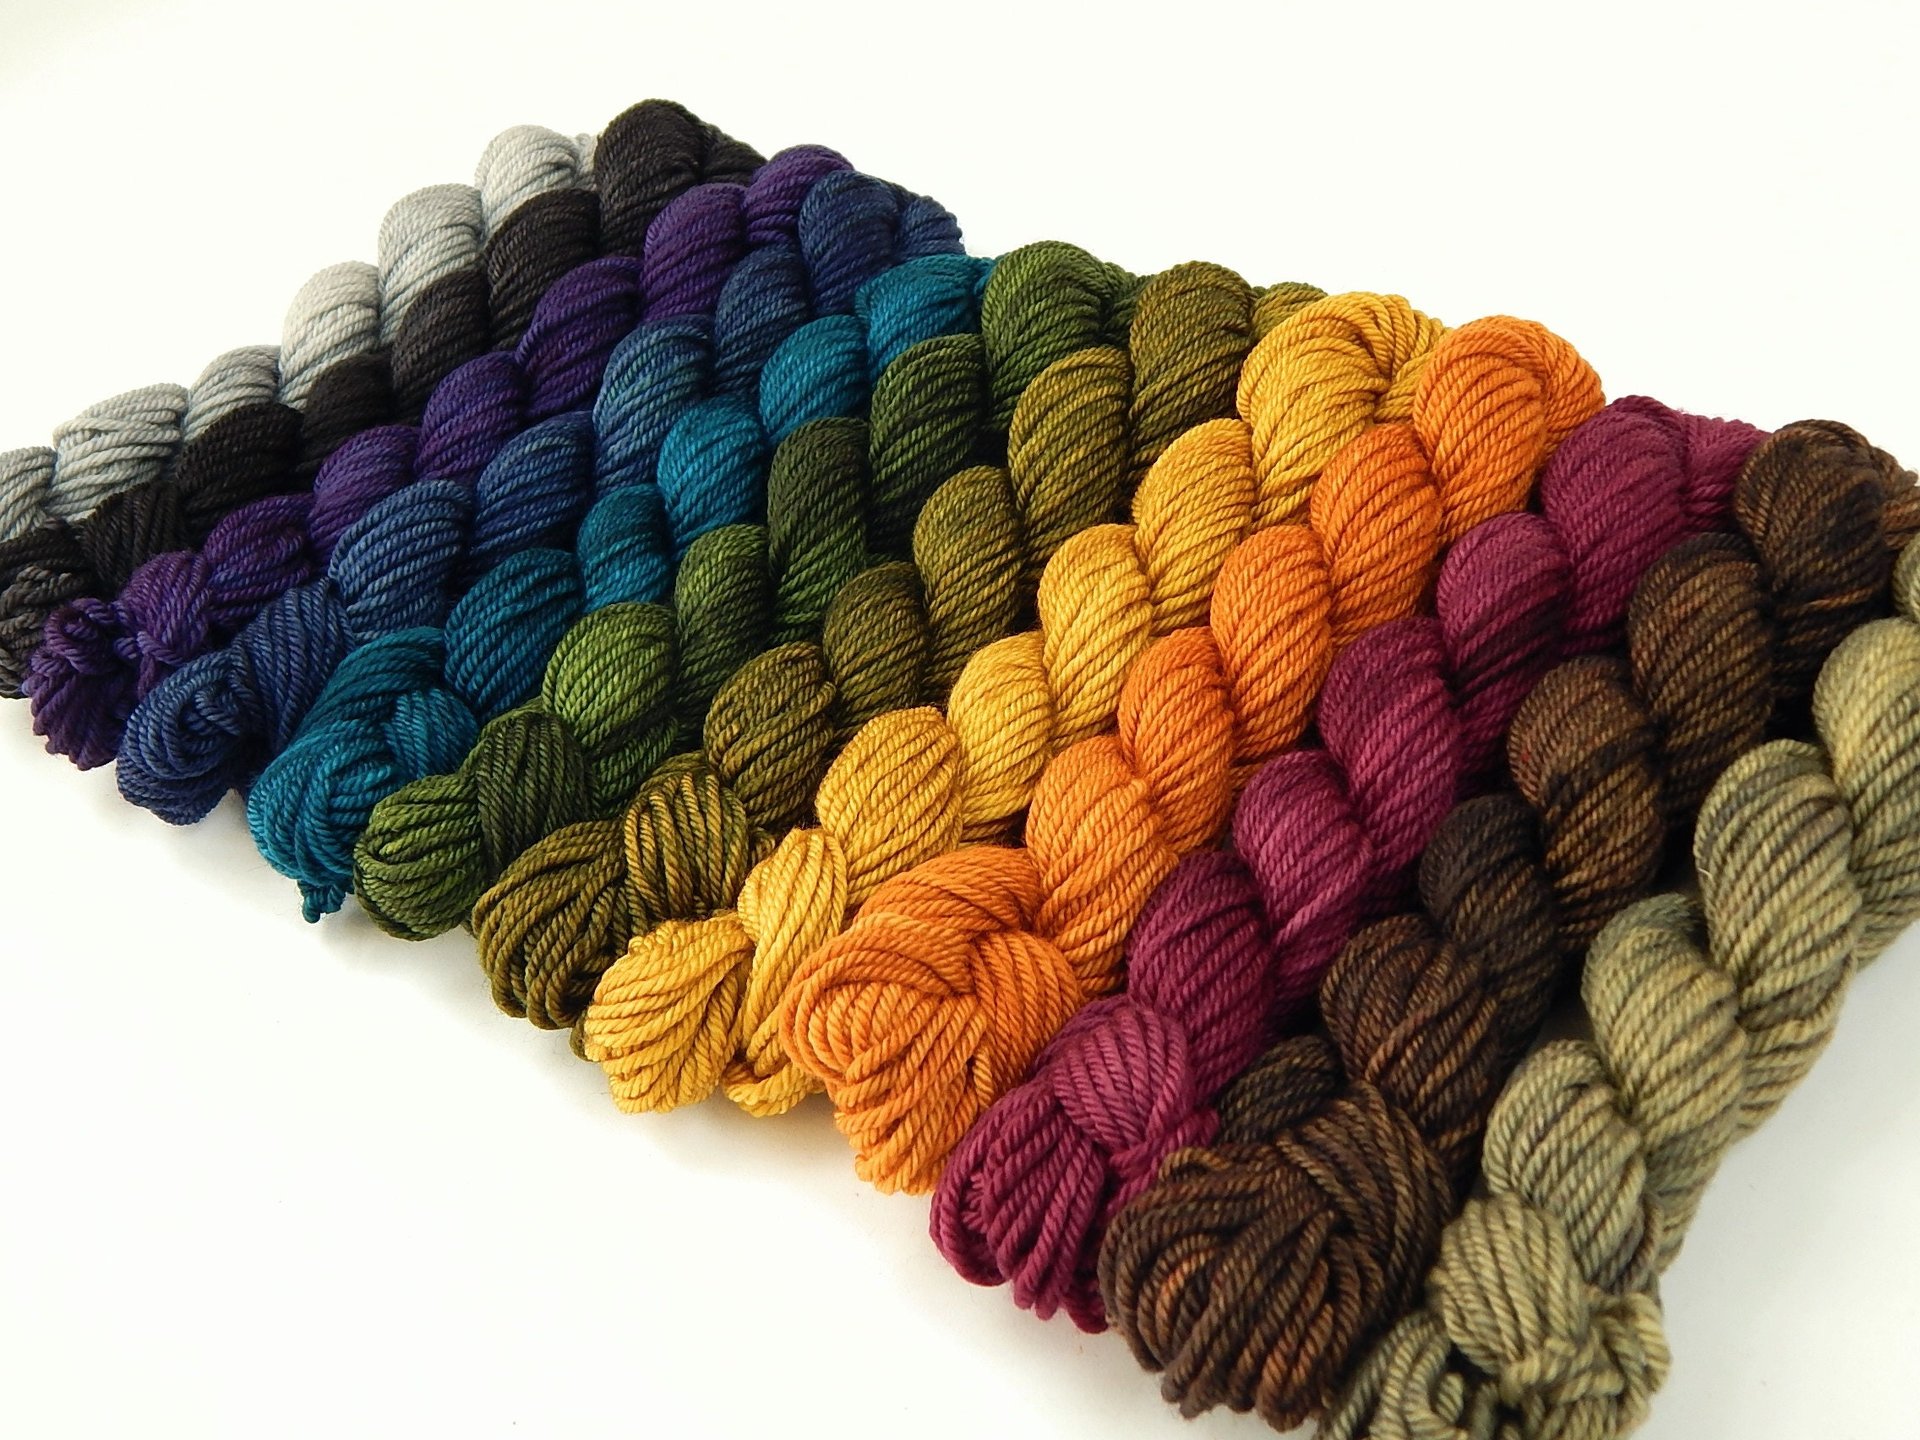 WORSTED Weight Mini Skeins, Hand Dyed Yarn, 100% Superwash Merino Wool - Saturated, Tonal Colors Knitting Yarn, 20g Per Skein